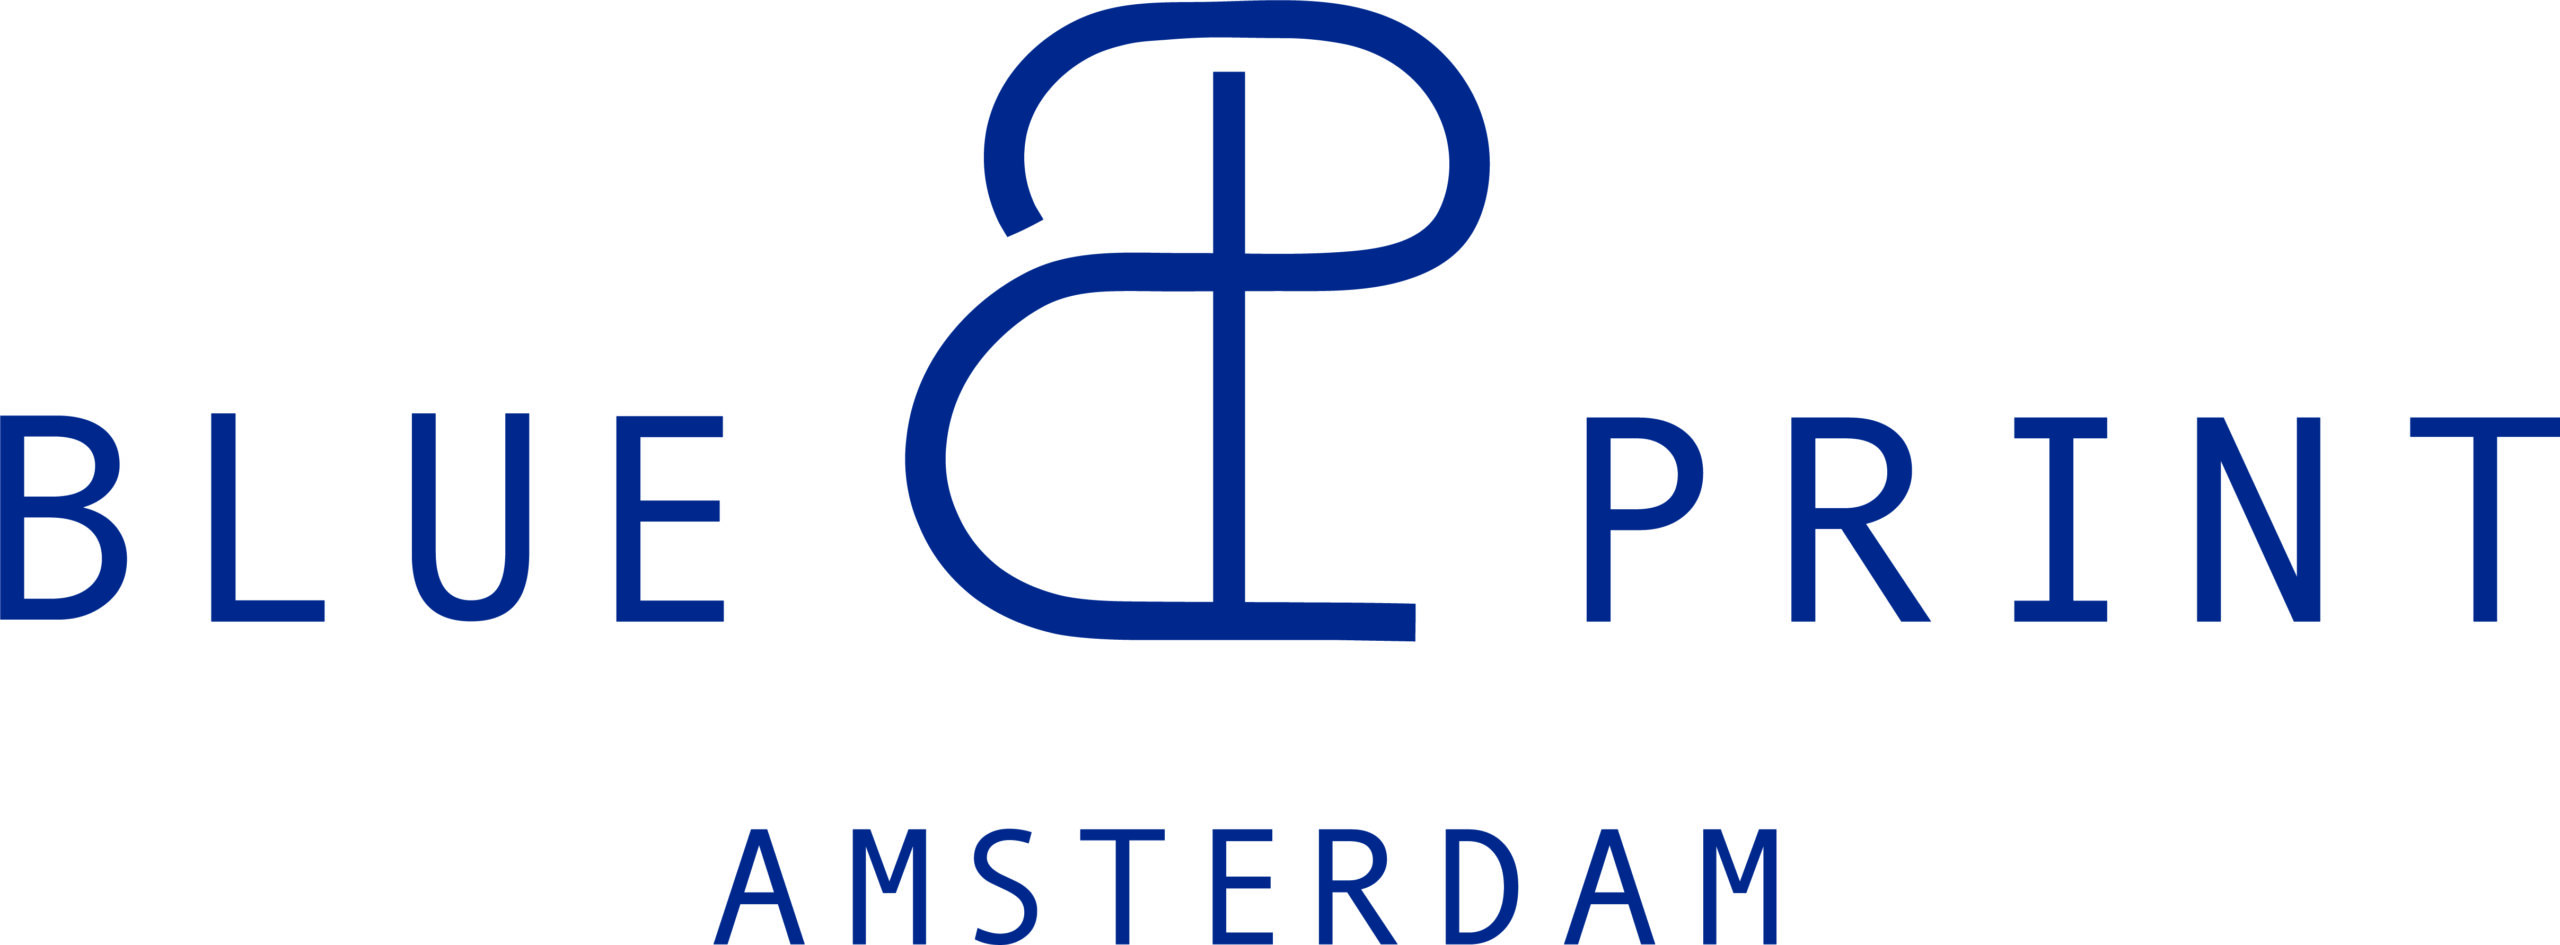 Blueprint Amsterdam